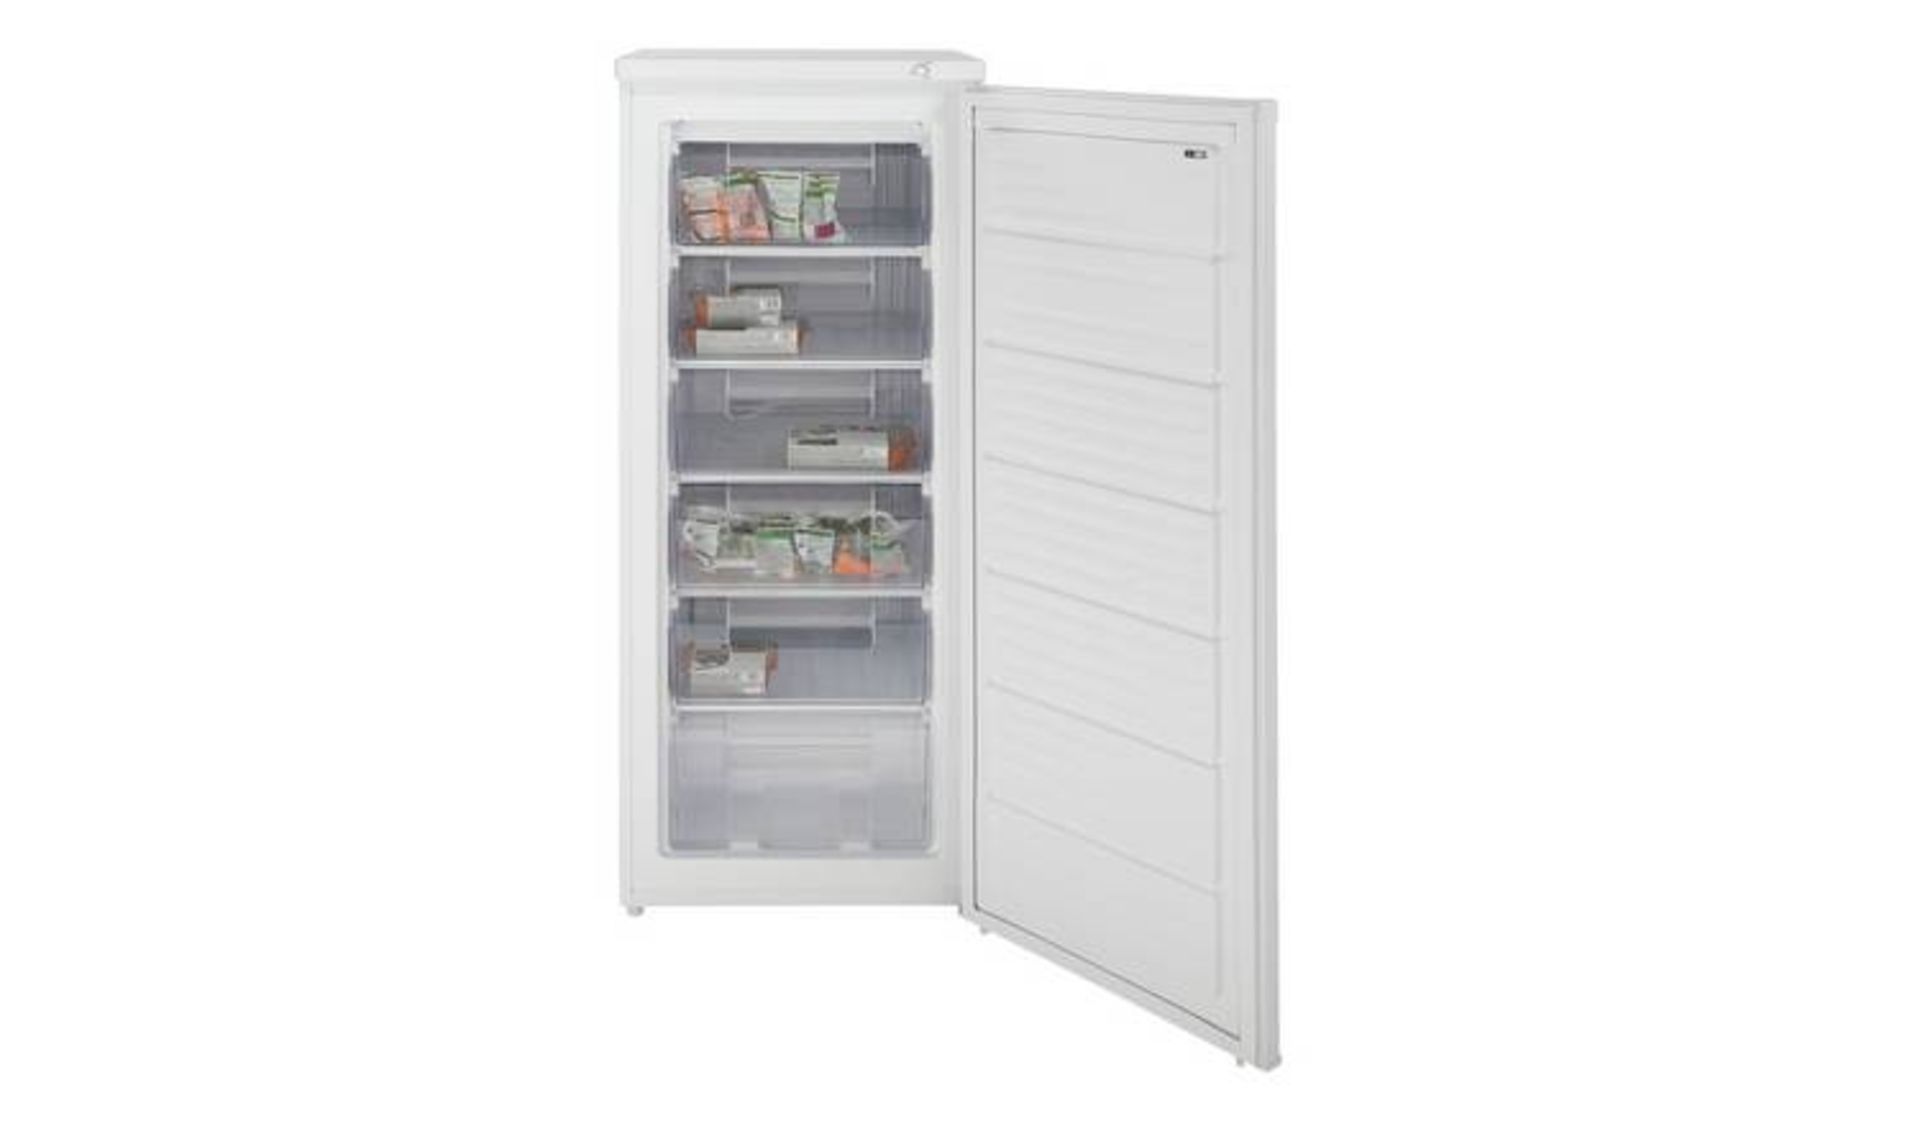 + VAT Grade A/B Bush M55TFW20 Tall Freezer - 163 Litre Capacity - Six Storage Compartments - A+ - Image 2 of 2